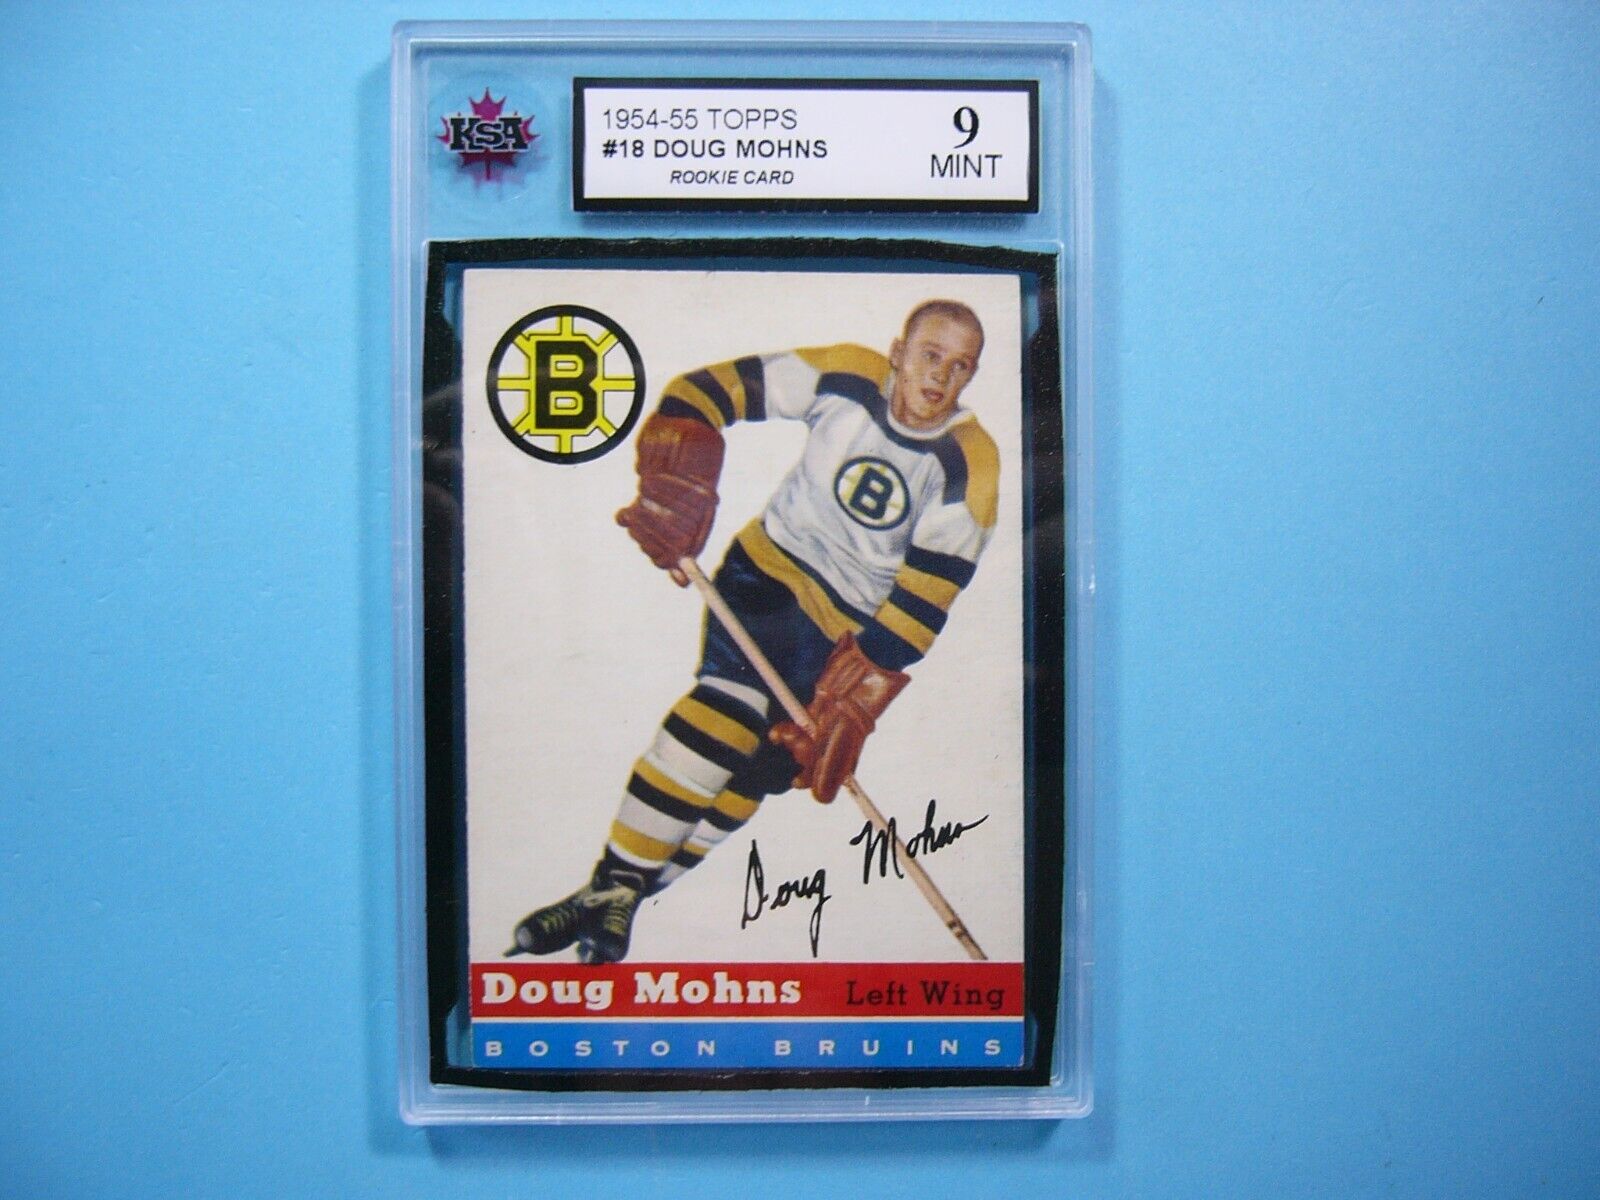 1954/55 TOPPS NHL HOCKEY CARD #18 DOUG MOHNS ROOKIE RC KSA 9 MINT SHARP TOPPS